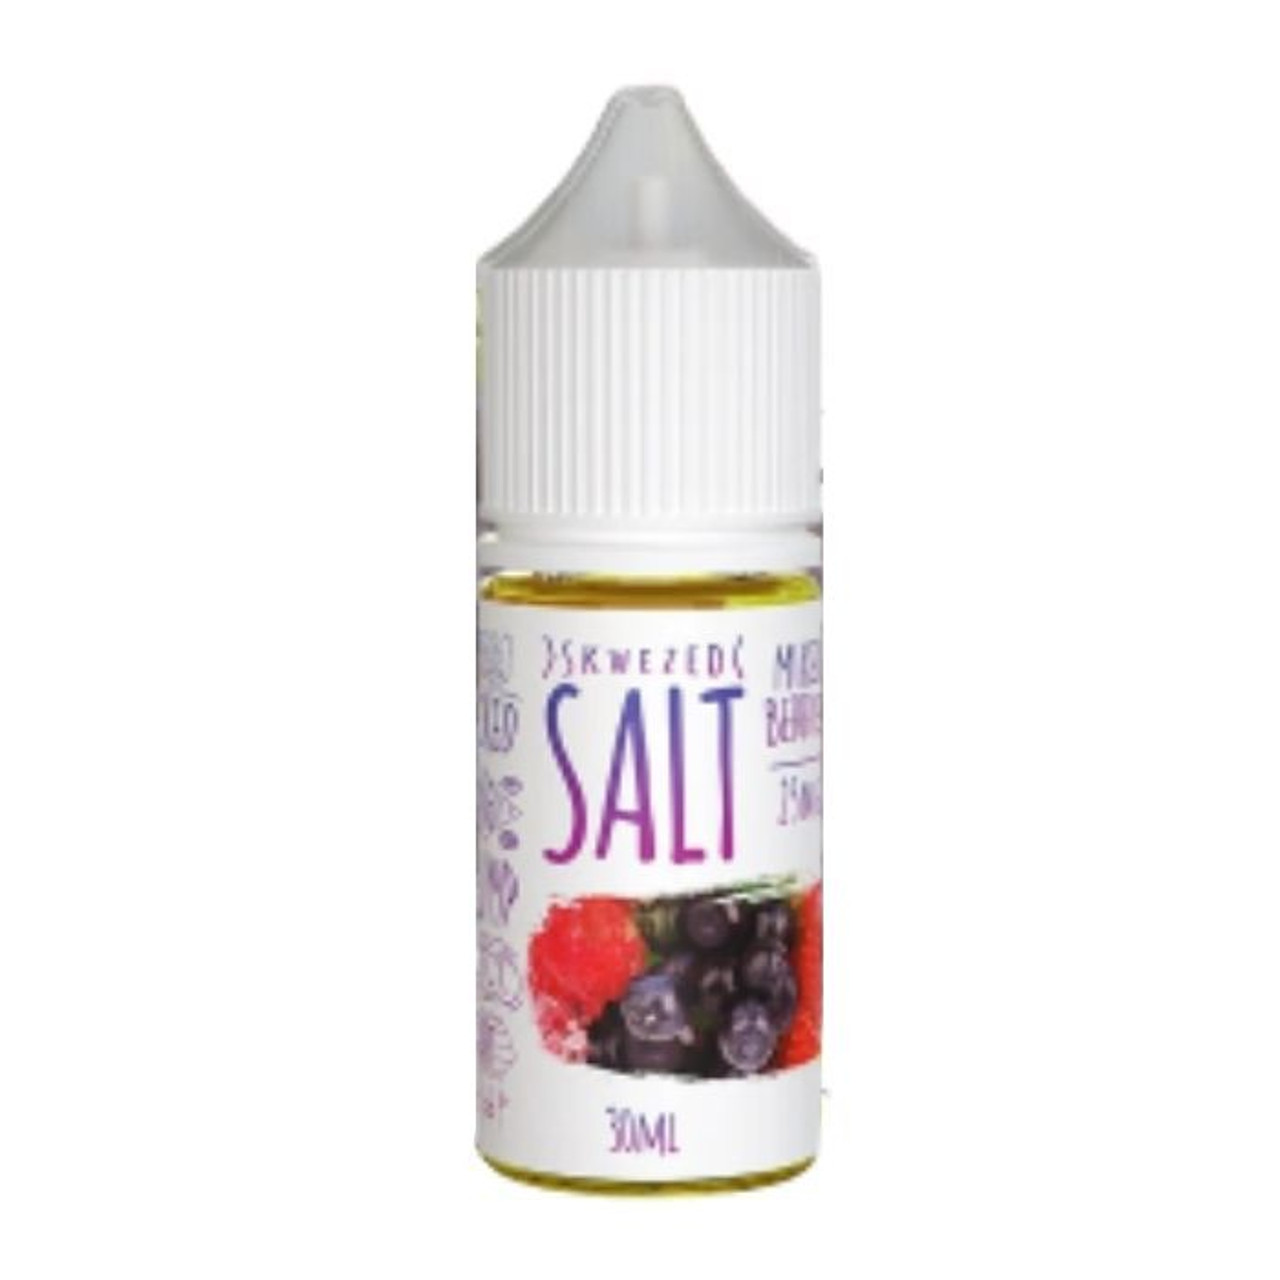 Mixed Berries Kilo Salt 30ml